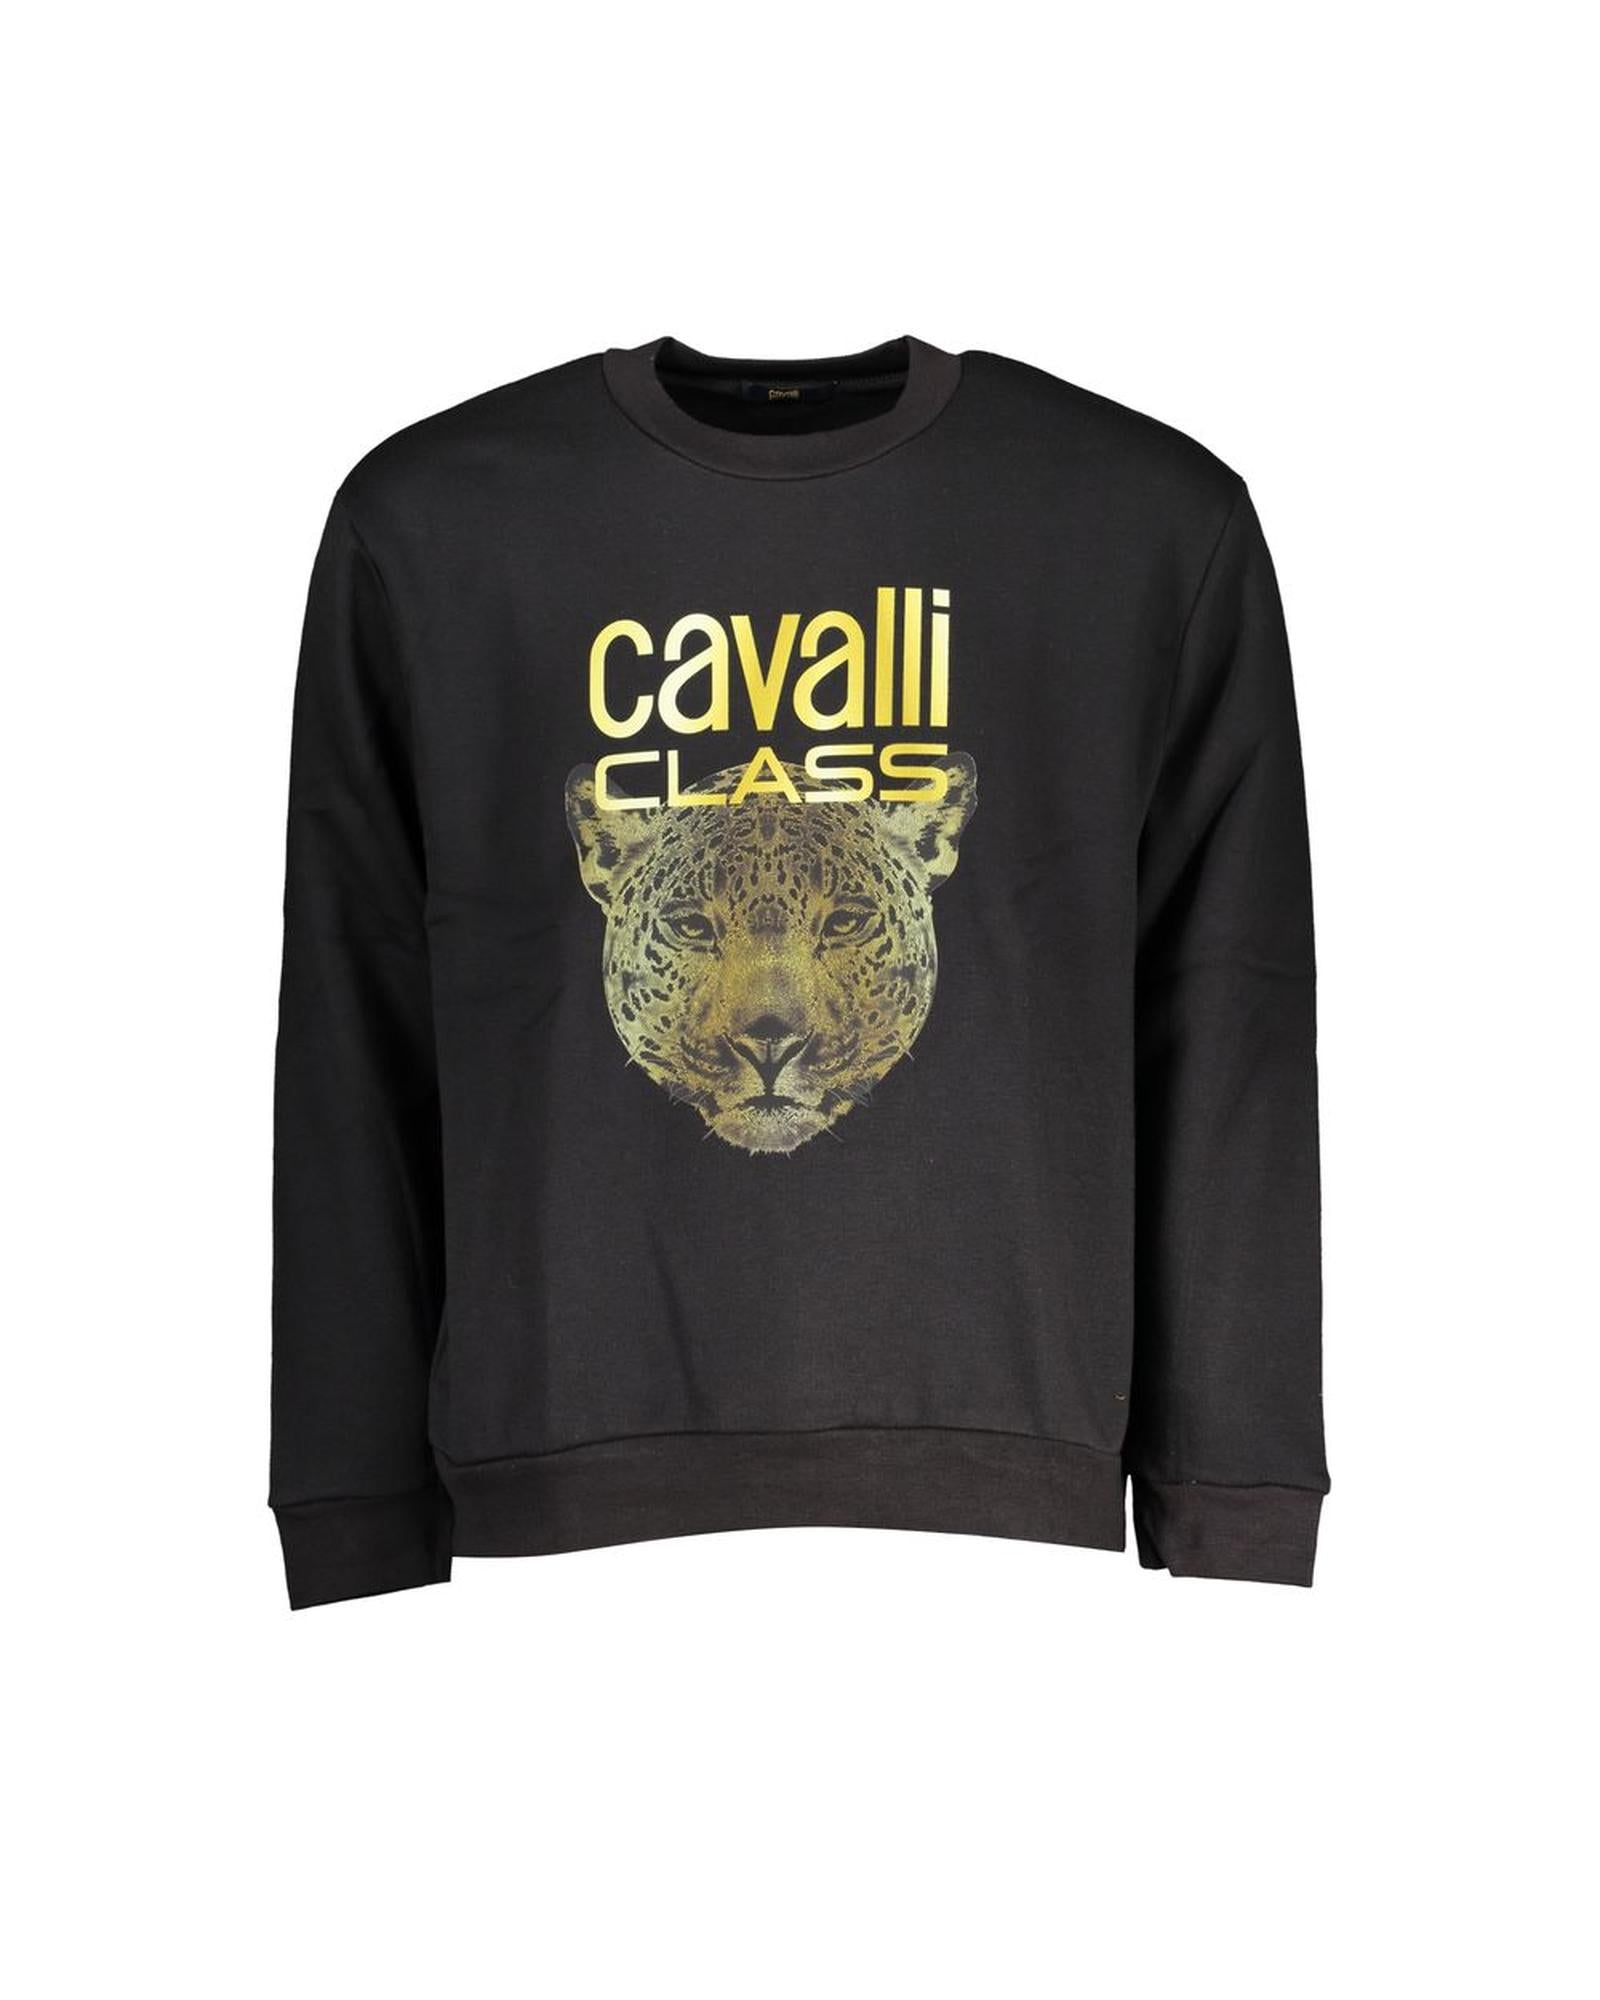 Chic Black/Blue Cotton Sweater For Women - Cavalli Class